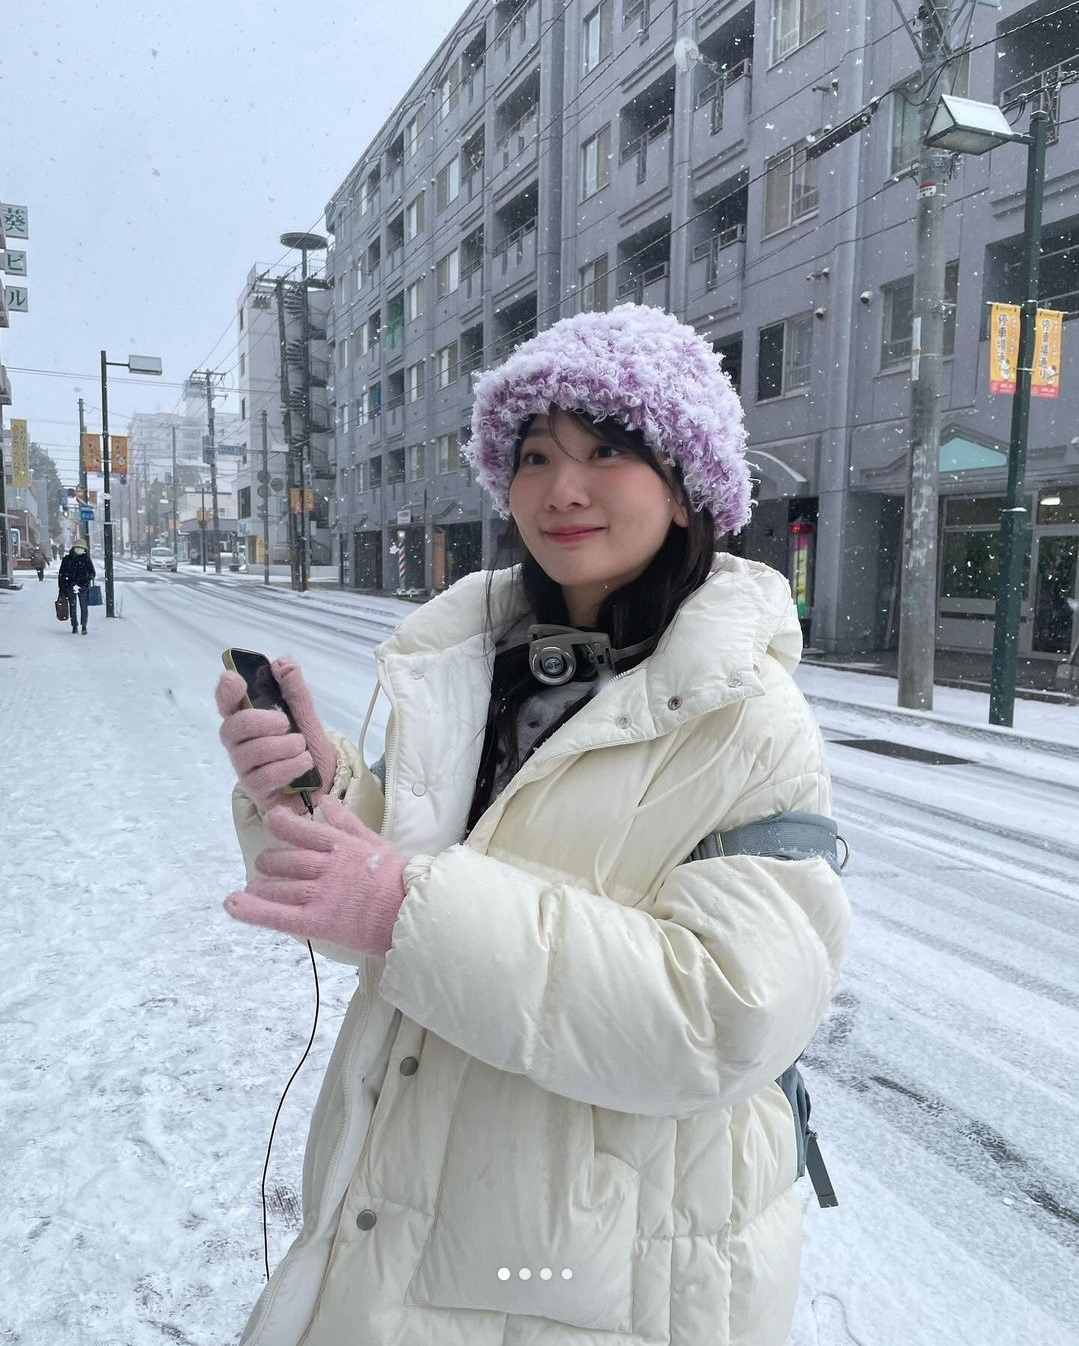 On a snowy day, cute cheeks, Ahn Jiyoung